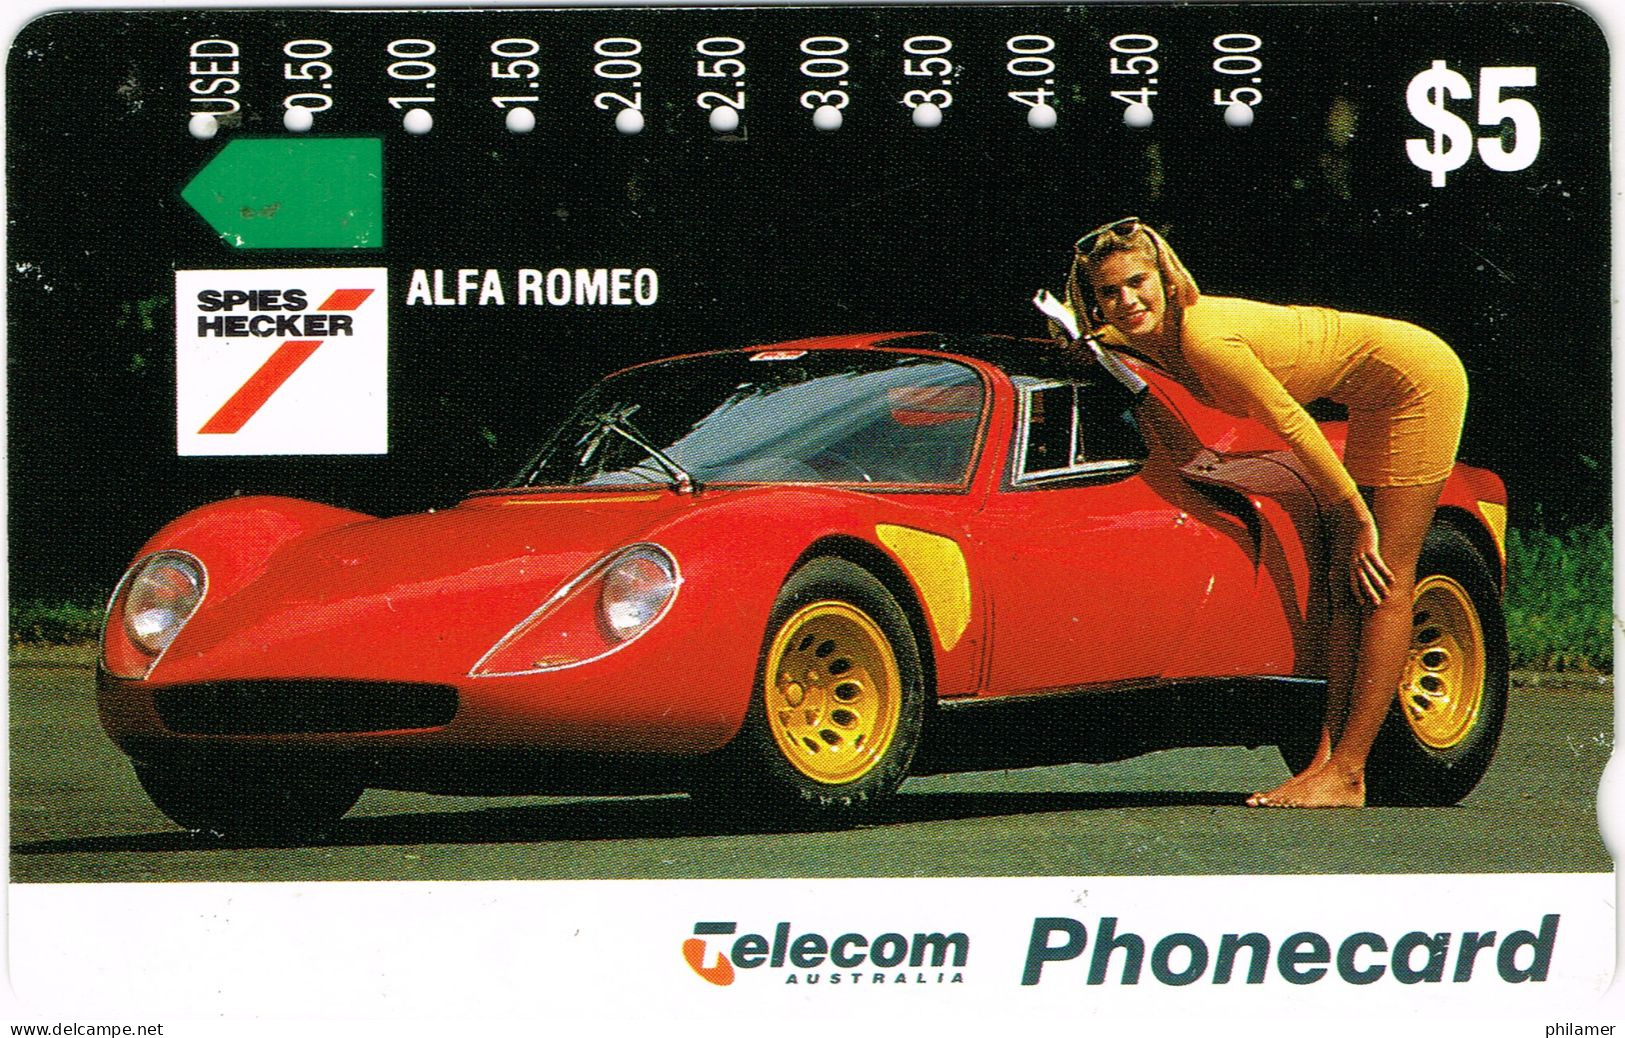 Australie Australia Telecarte Phonecard Carte A Trous Privee Spies Hecker Alfa Romeo Voiture Car 5$ UT  BE - Australië